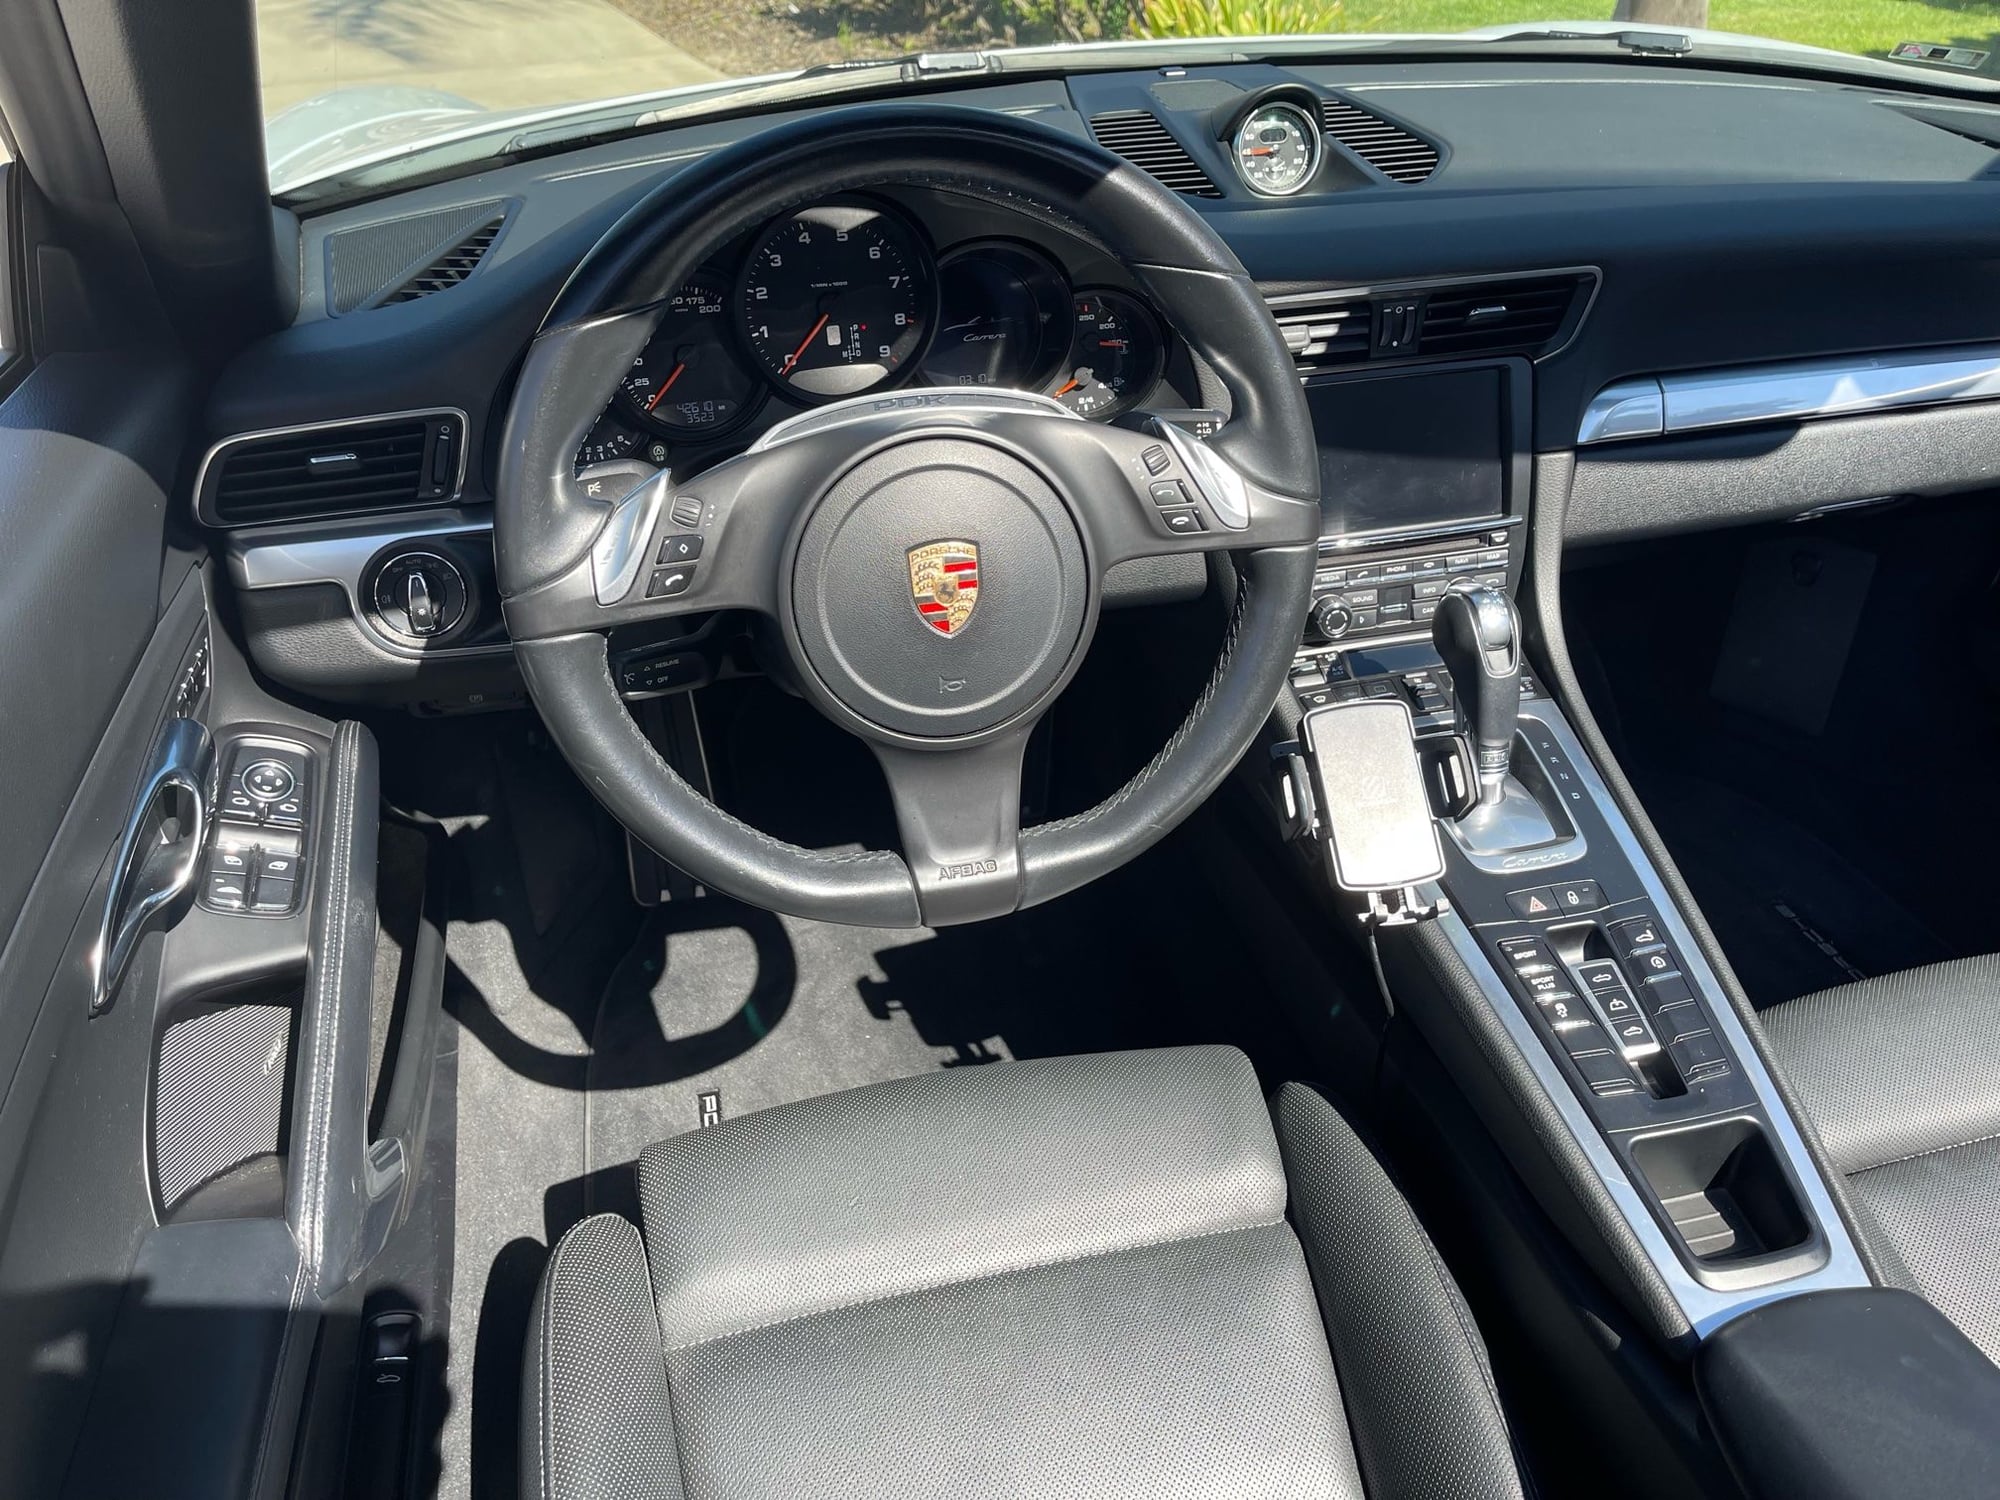 2015 Porsche 911 - 2015 Porsche 911 Carrera Cabriolet - Used - VIN WP0CA2A94FS141198 - 43,000 Miles - 6 cyl - 2WD - Automatic - Convertible - White - Anaheim, CA 92808, United States